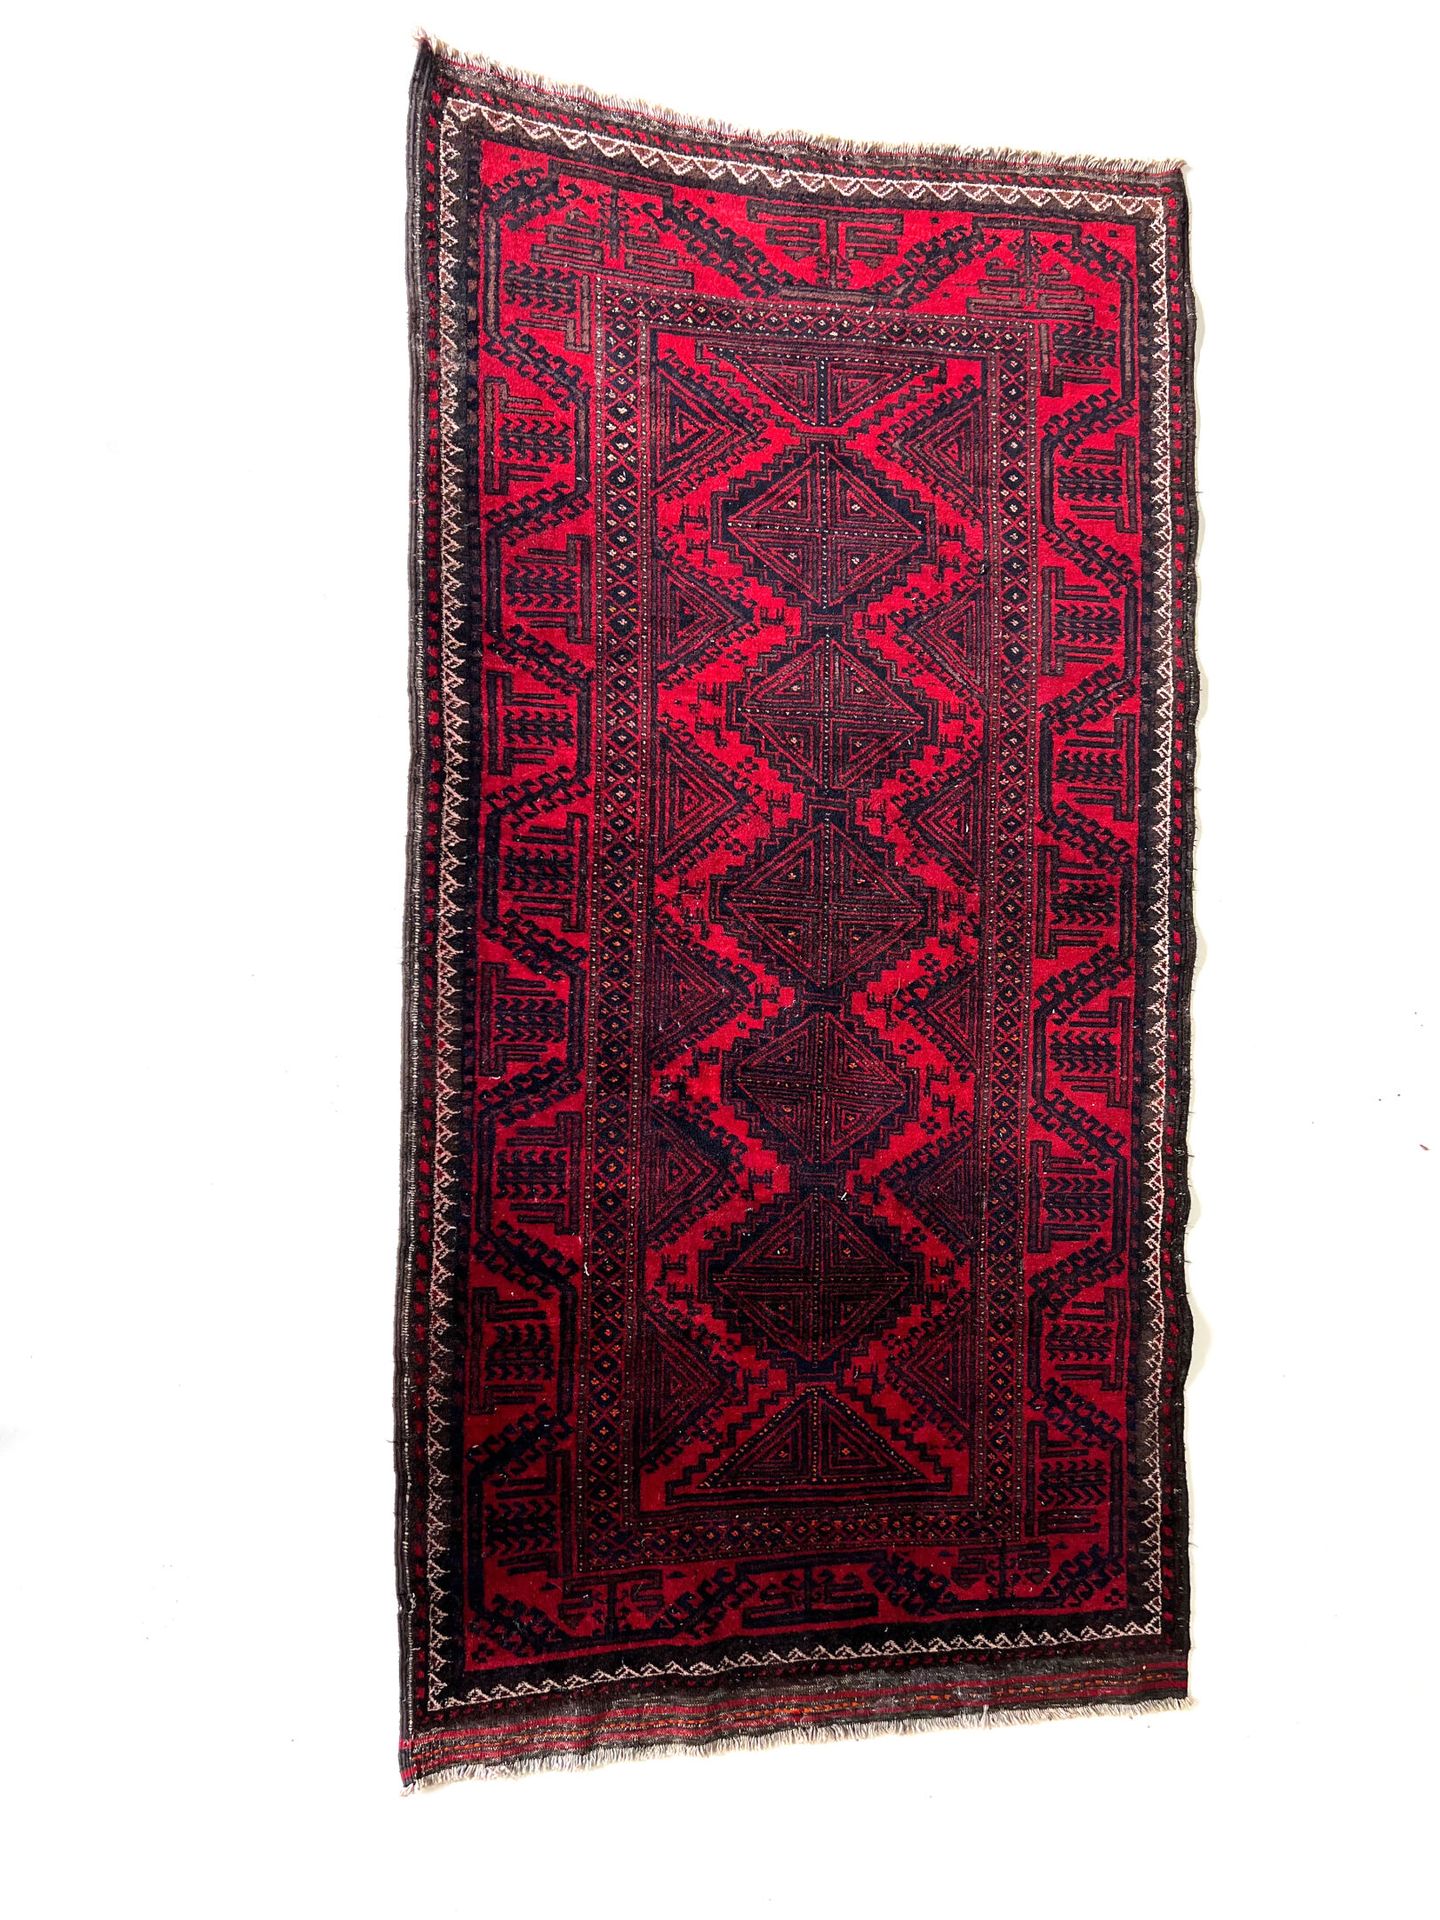 Null 东方的地毯

萨拉克地毯，19世纪，红色和棕色的色调，三层边框。装饰有形成门楣的奖章和风格化的几何图案。

状态良好 - 长2.10 x 宽1.10厘&hellip;